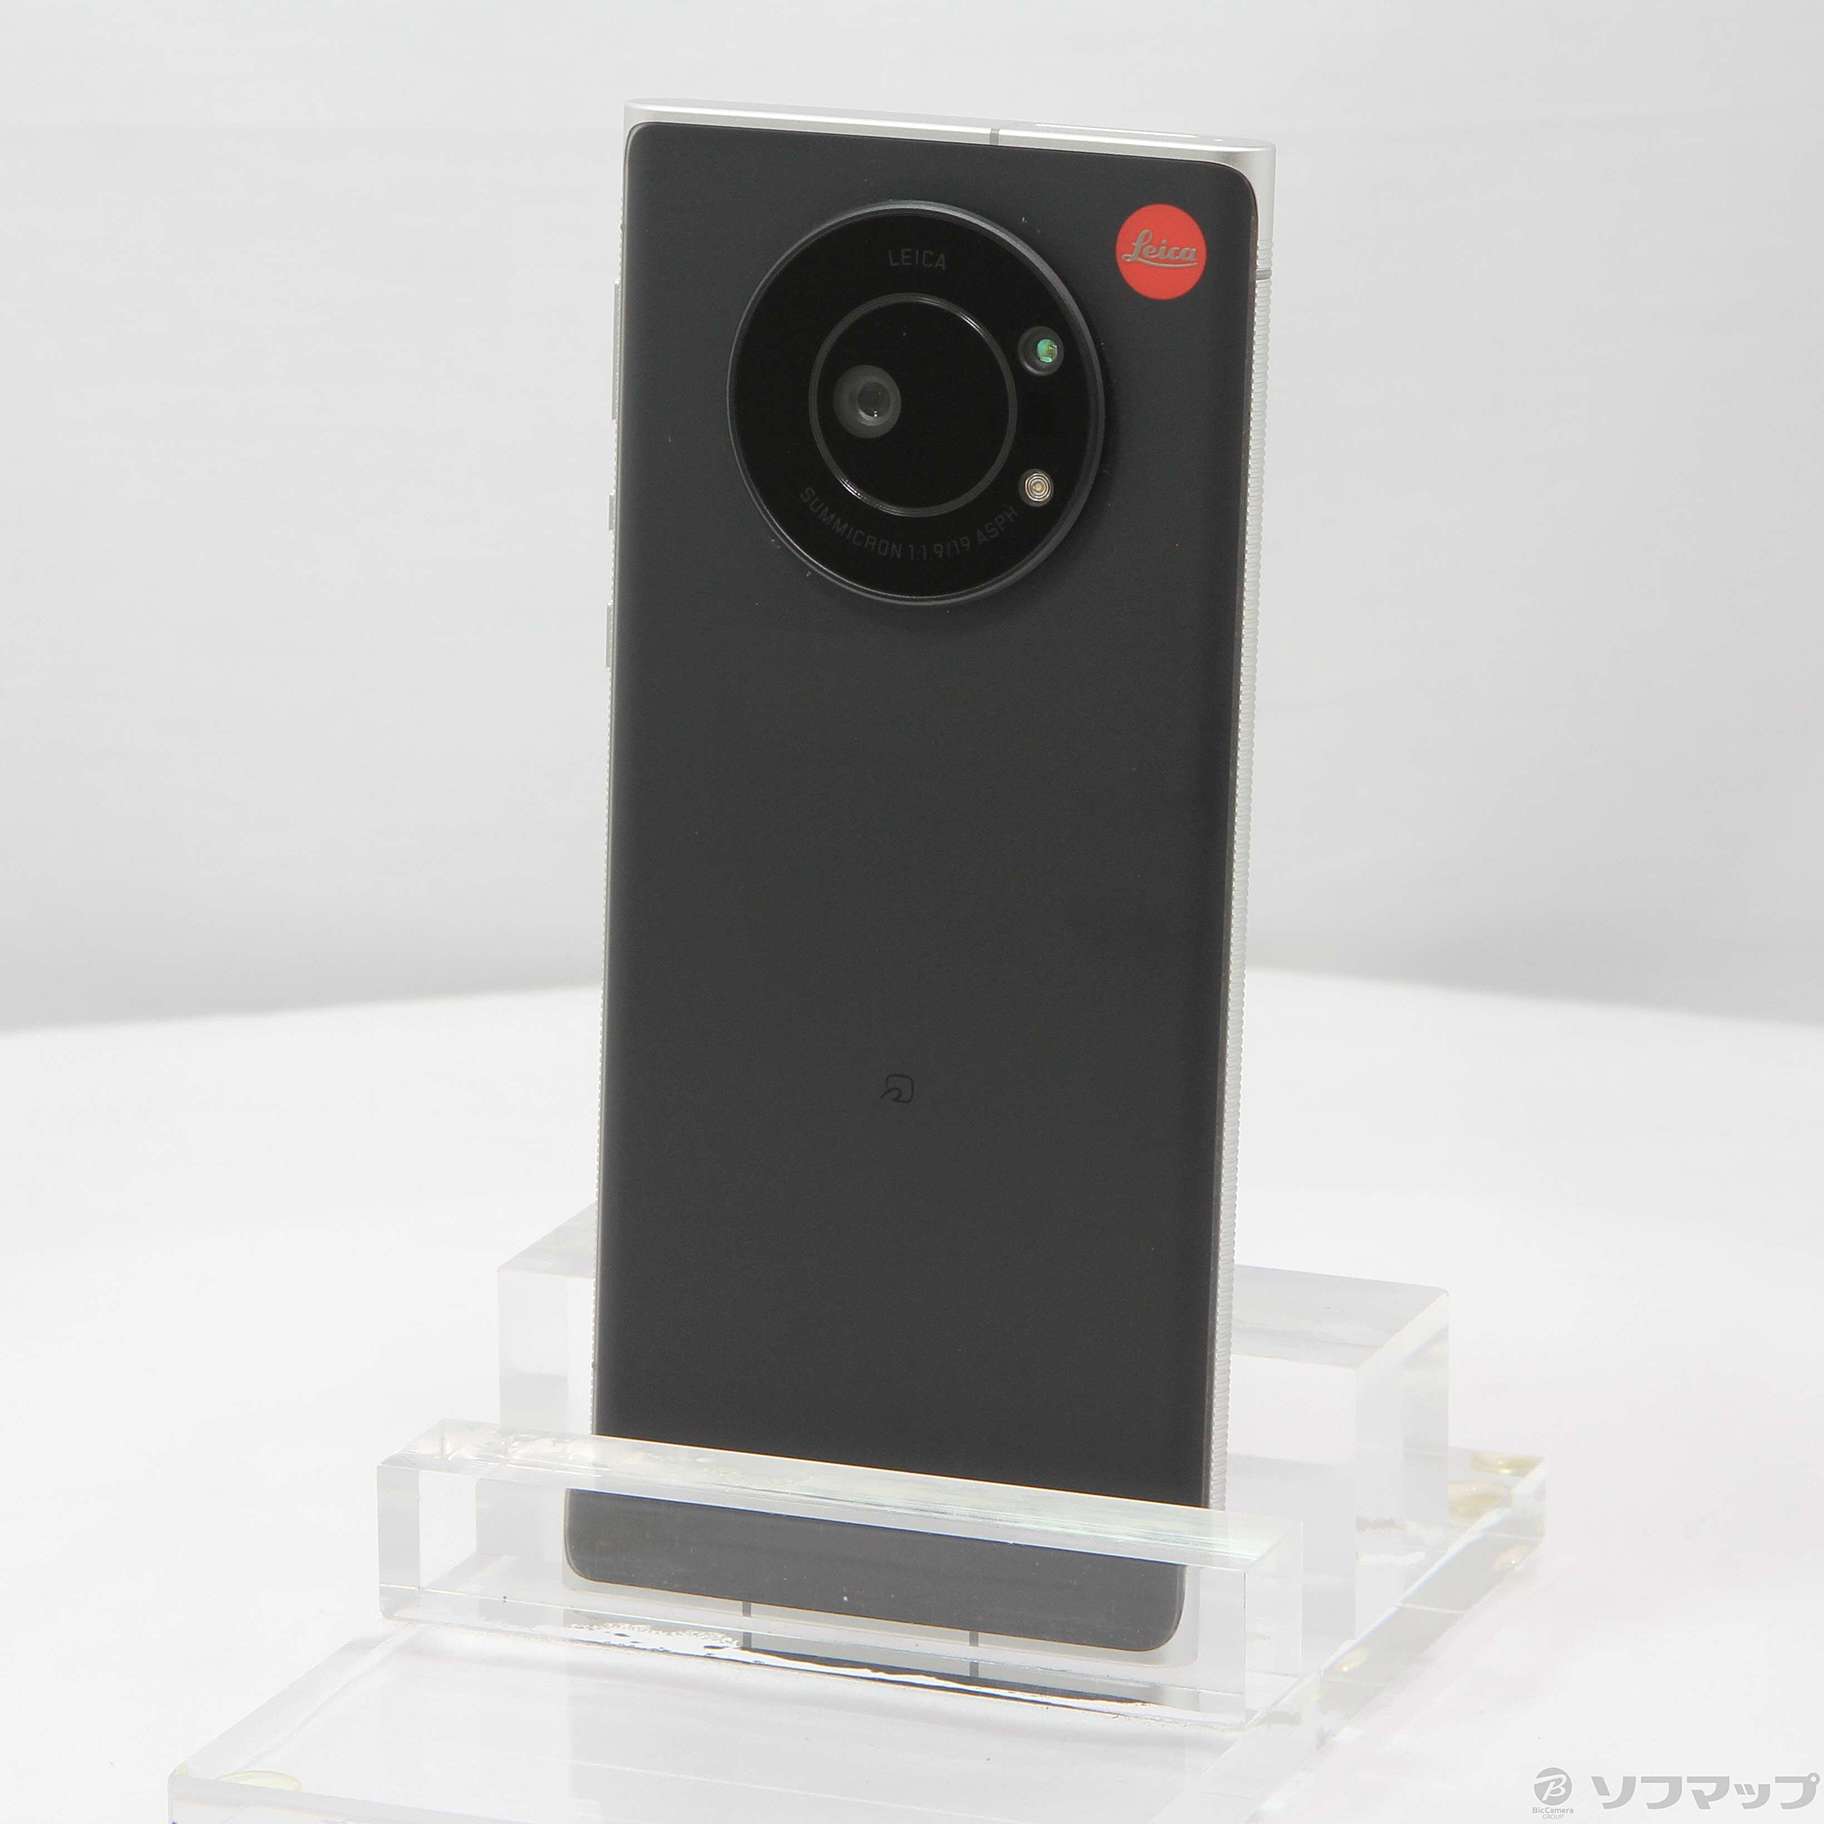 Leitz Phone 1 256GB ライカシルバー LP-01 SoftBankロック解除SIMフリー